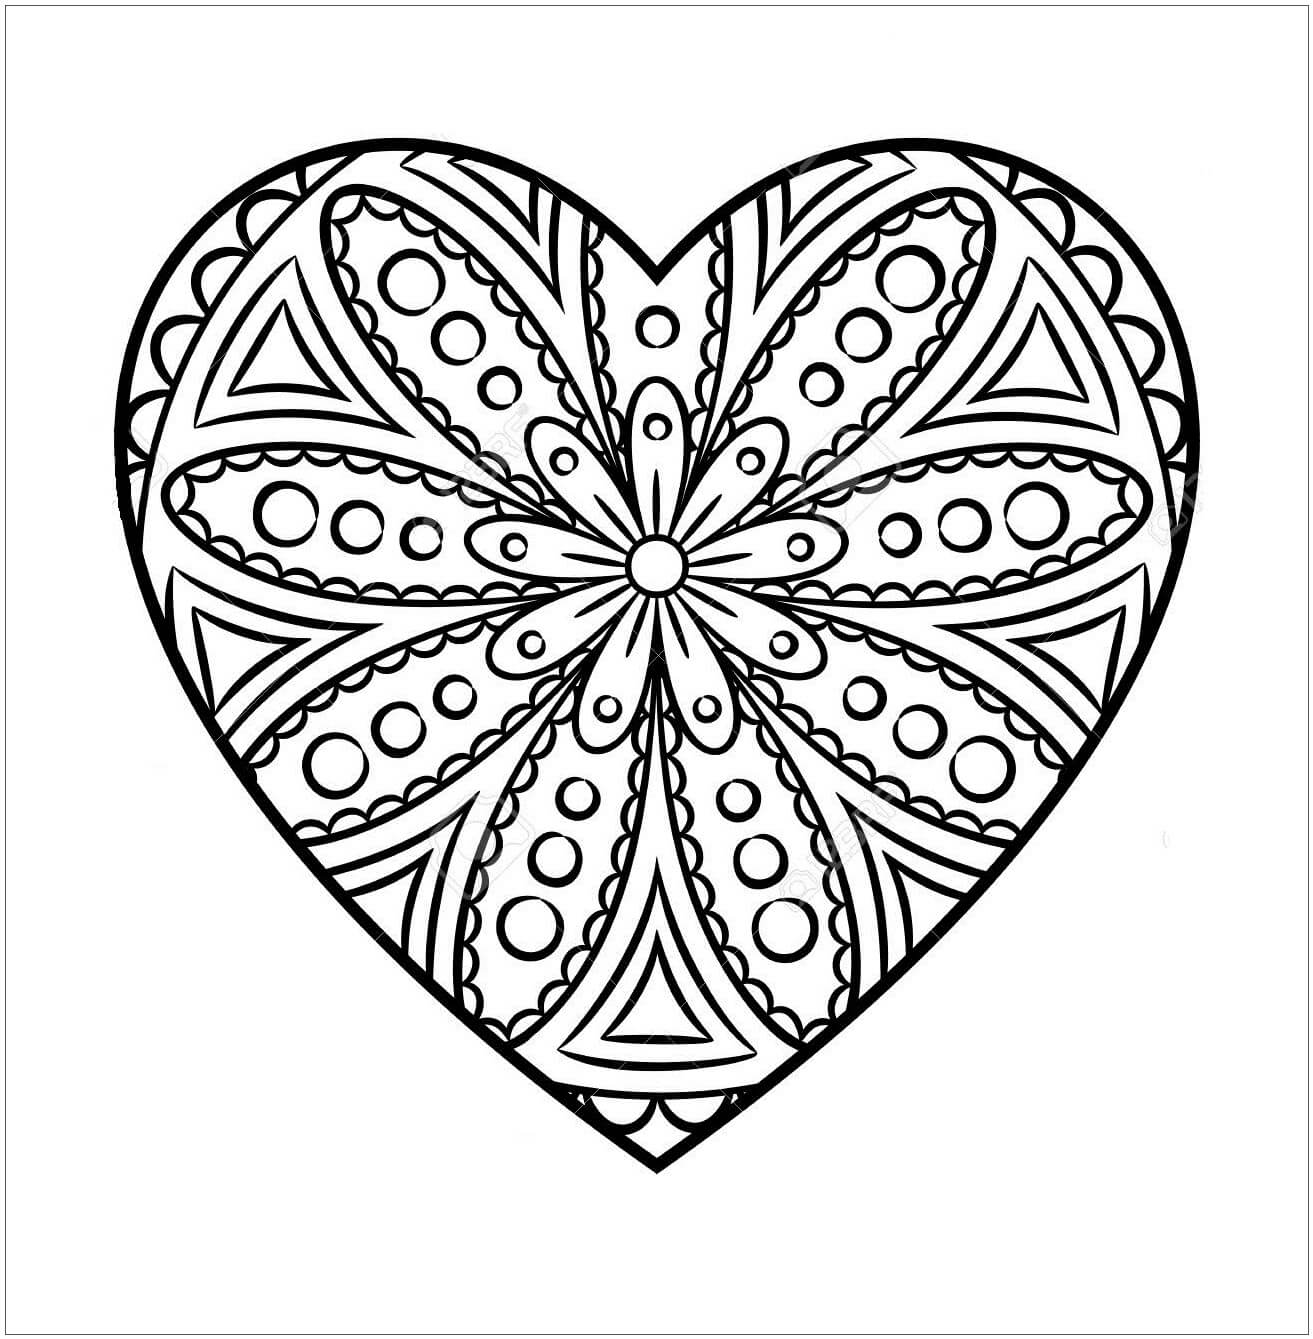 Incroyable Mandala Coeur coloring page